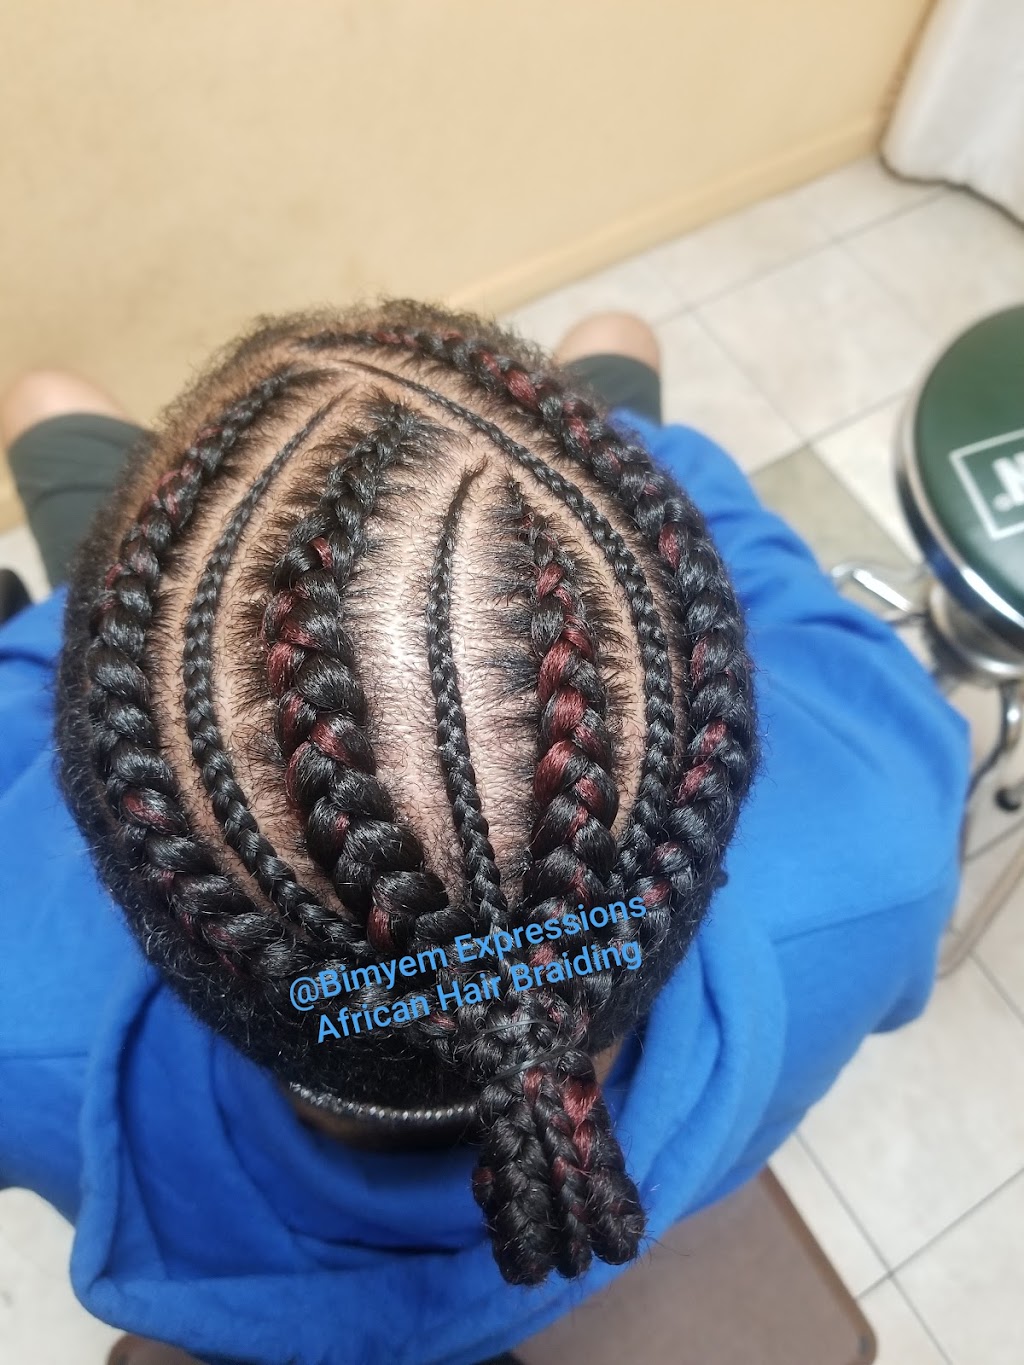 Bimyem Expressions African hair braiding | 5145 Lake Ridge Pkwy #105, Grand Prairie, TX 75052, USA | Phone: (240) 643-0840